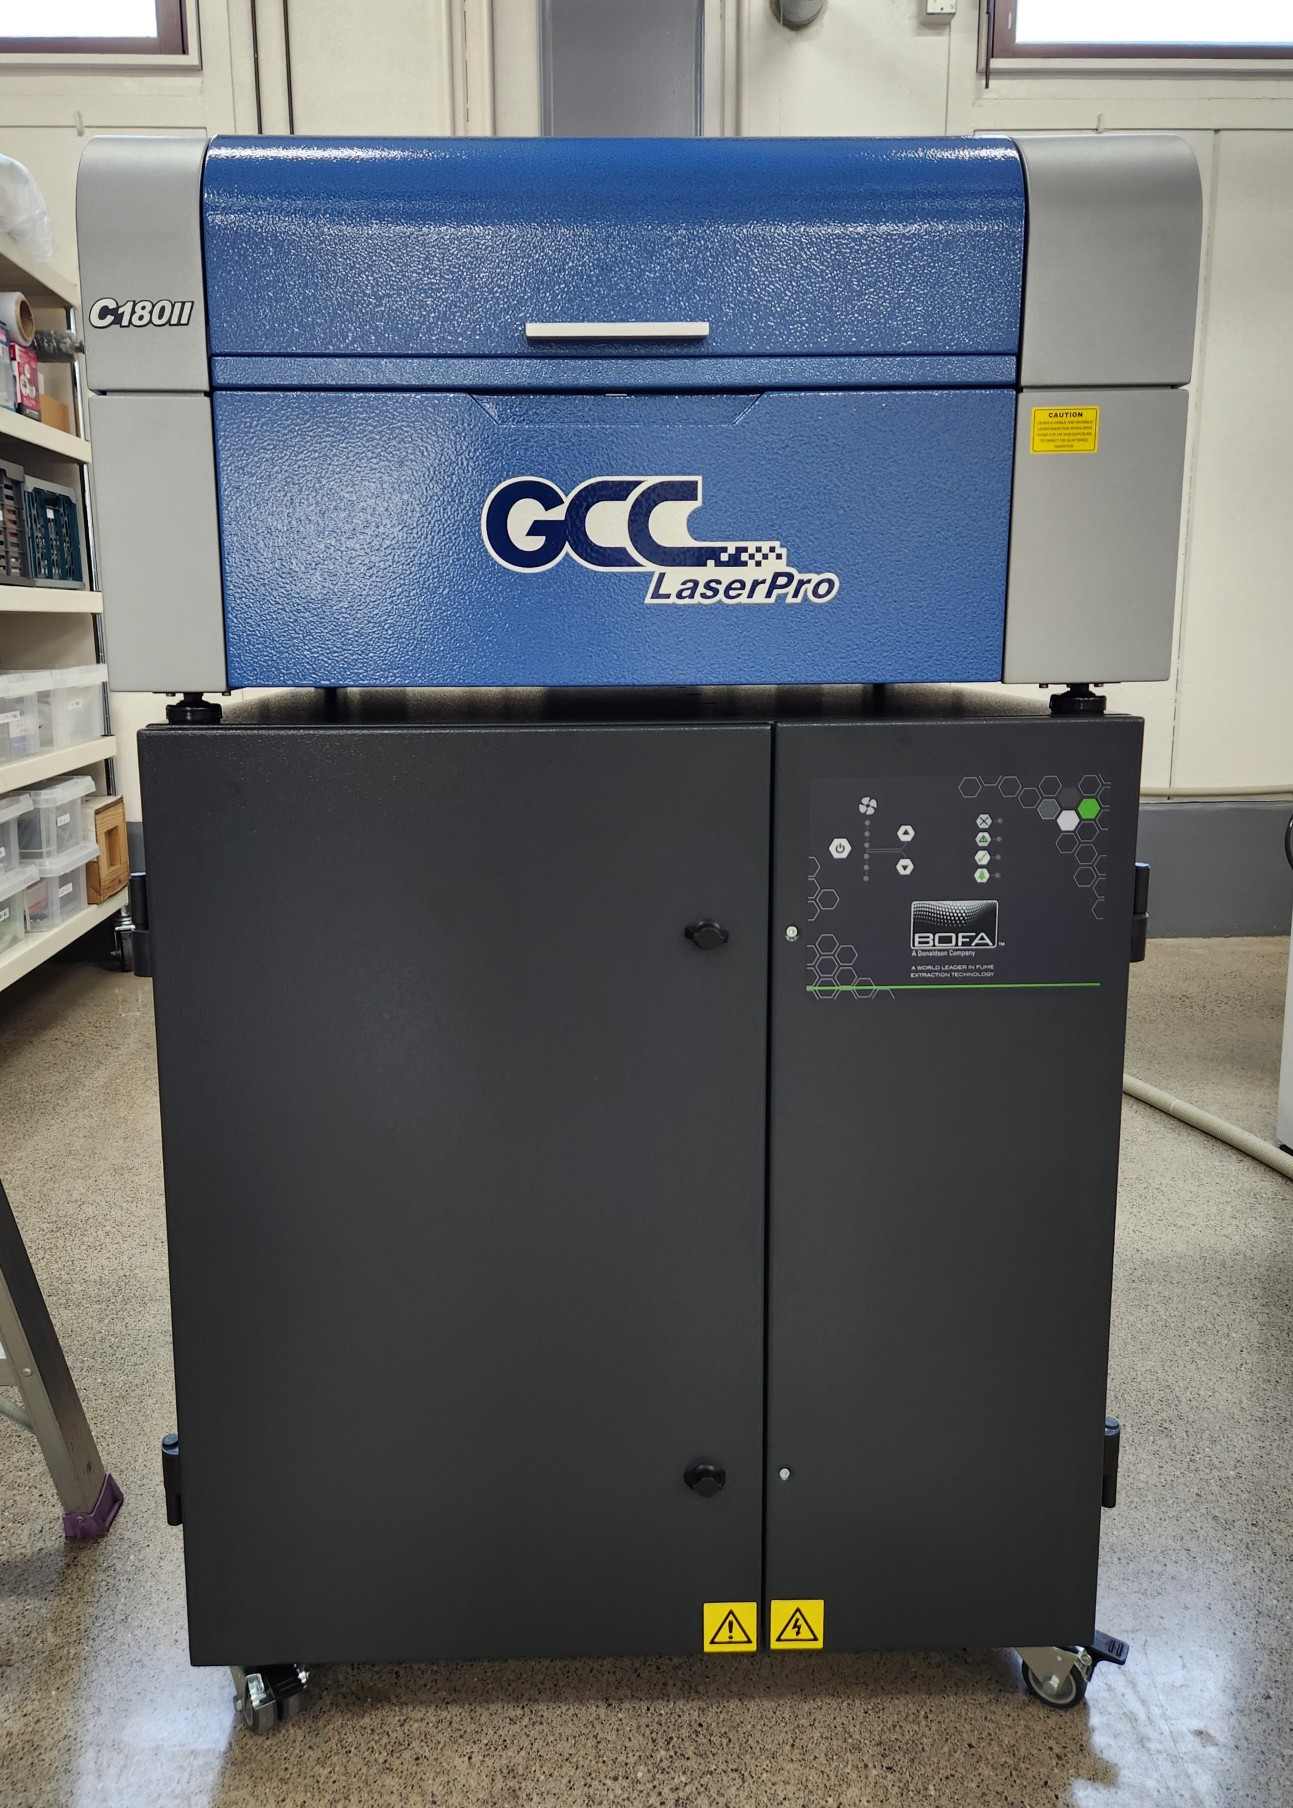 汎用型レーザー加工機「GCC LaserPro C180II」